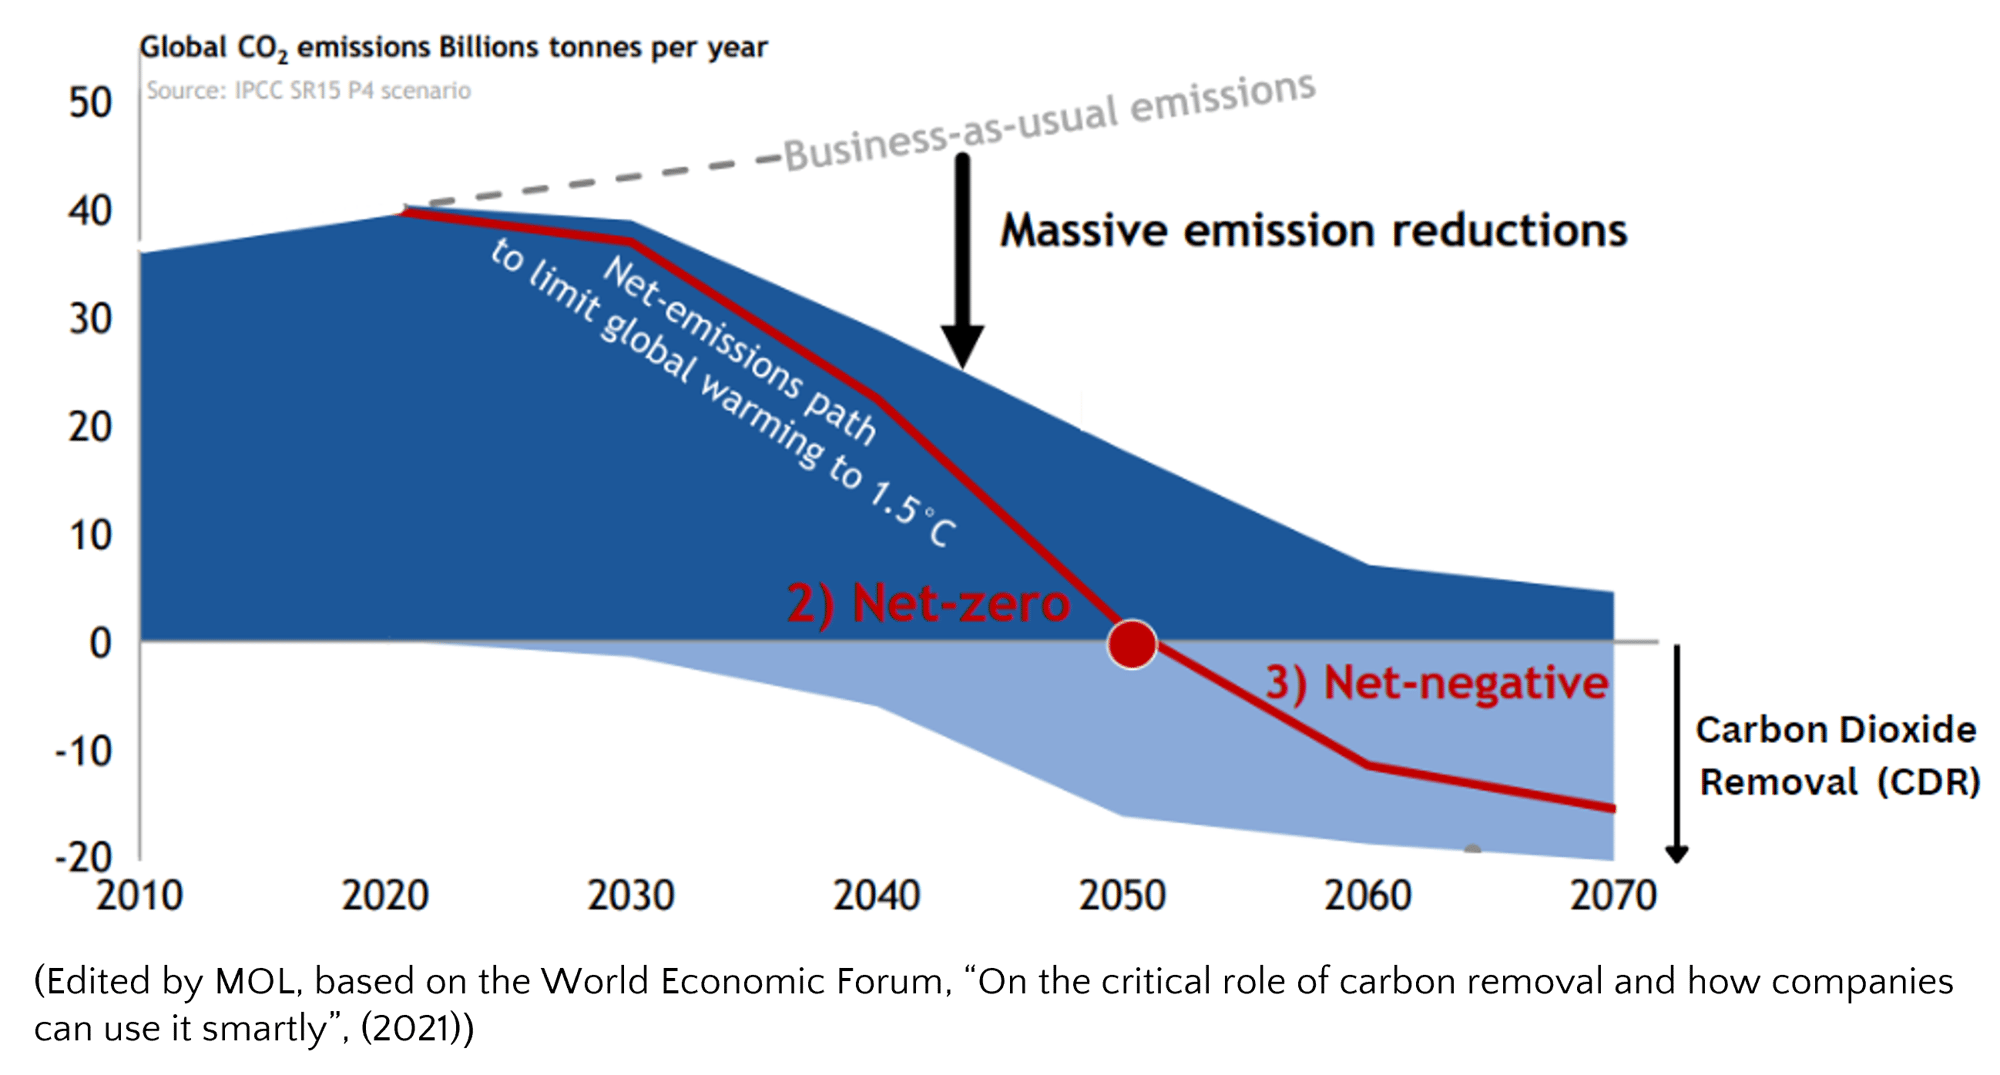 Global Co2 emissions Billions tonners per year